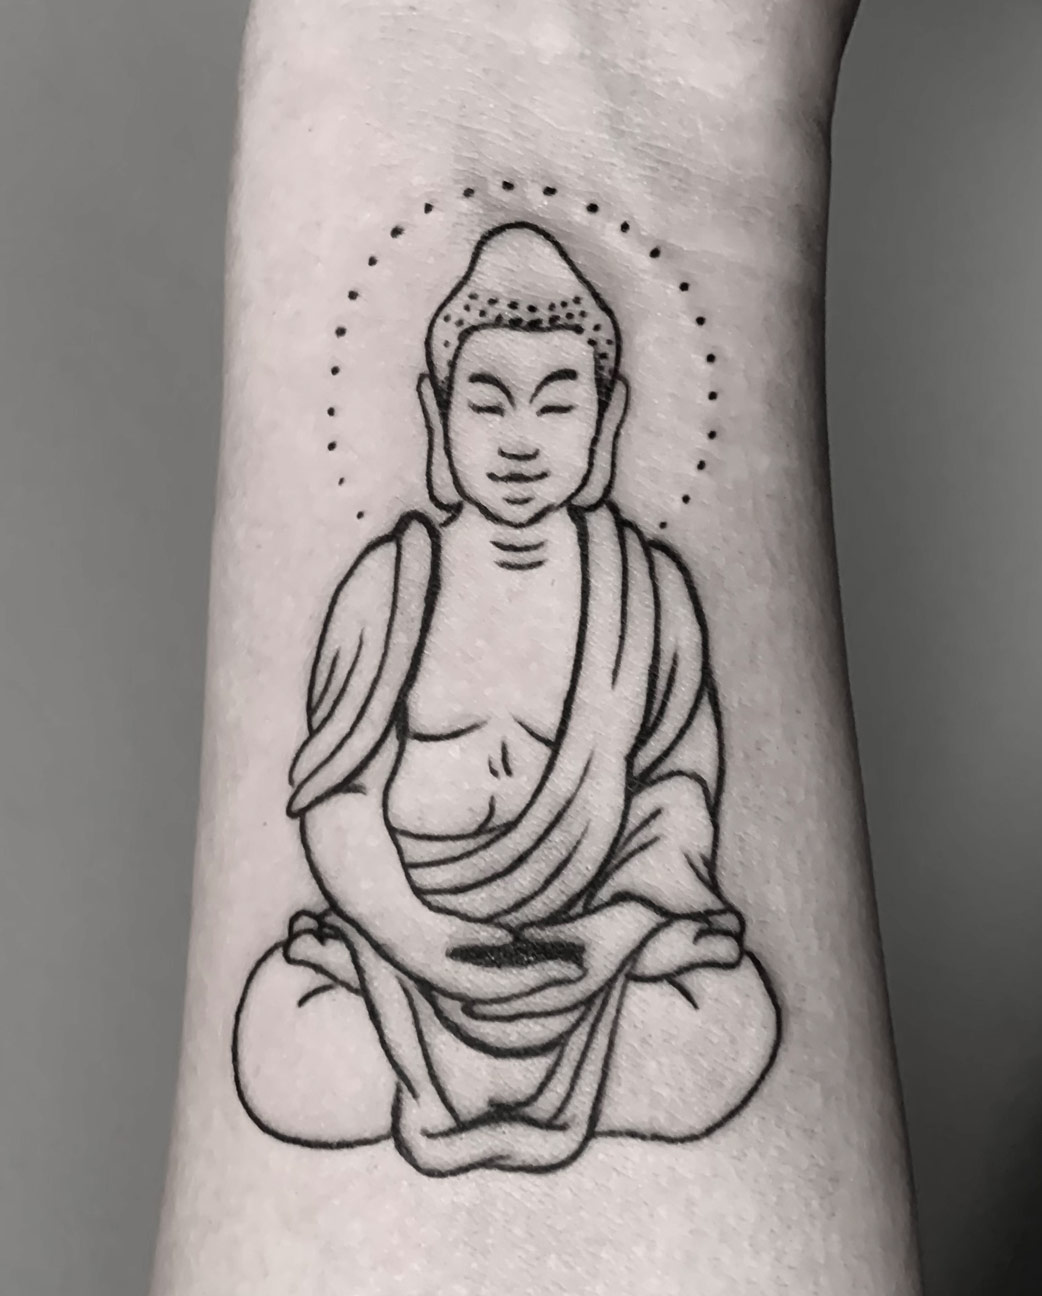 Tattoo Anansi Studio München Munich Haidhausen Tim buddha small japanese spiritual healing praying meditation best lineoworl blackwork neojapanese